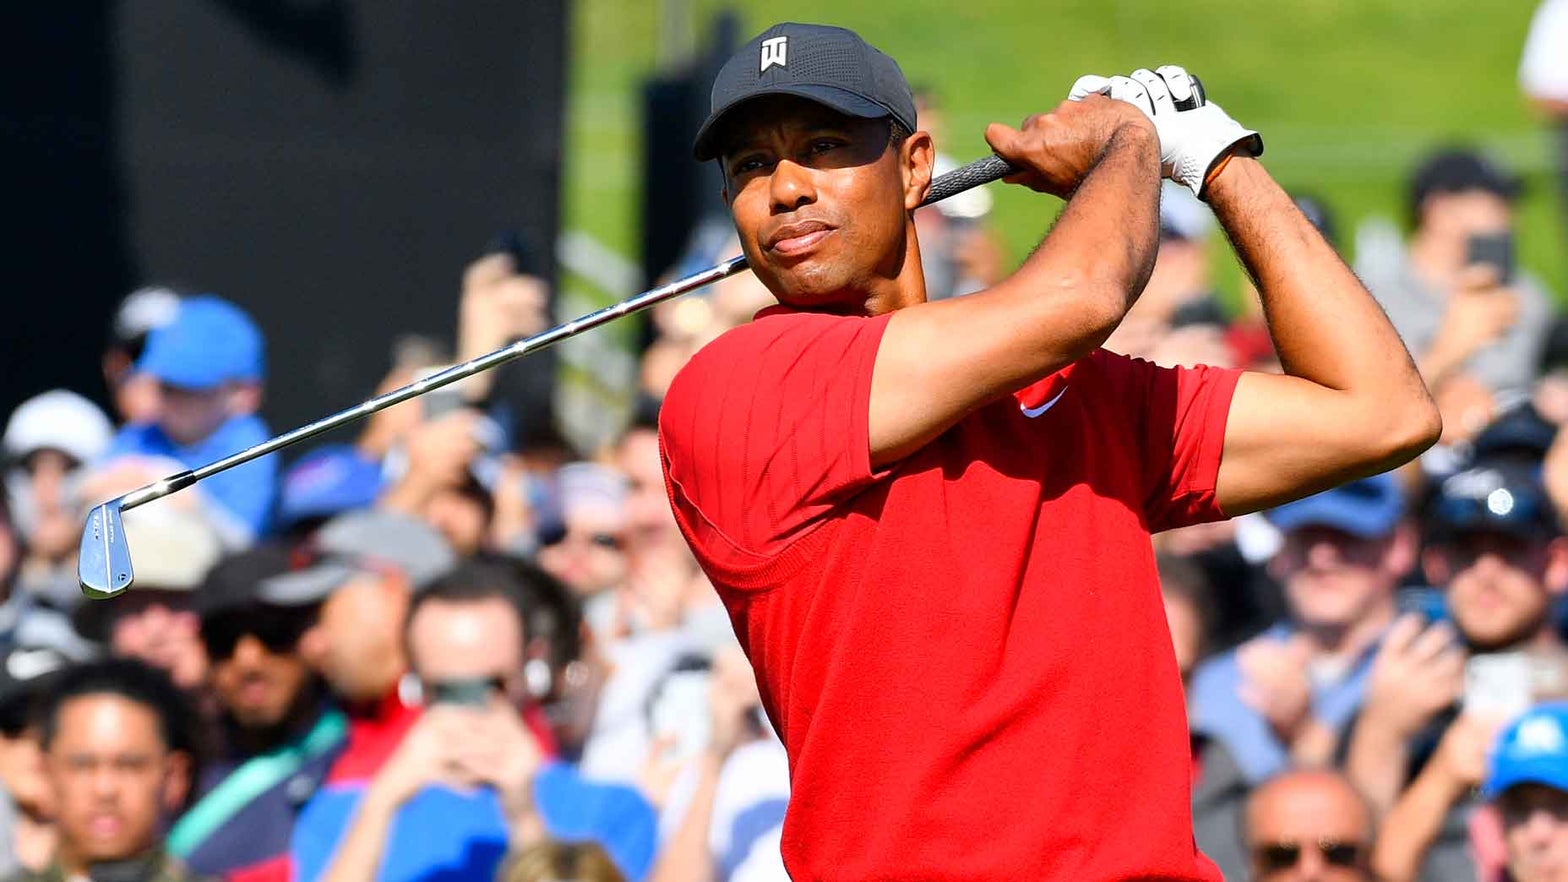 When will Tiger Woods make his PGA Tour return? Not next week